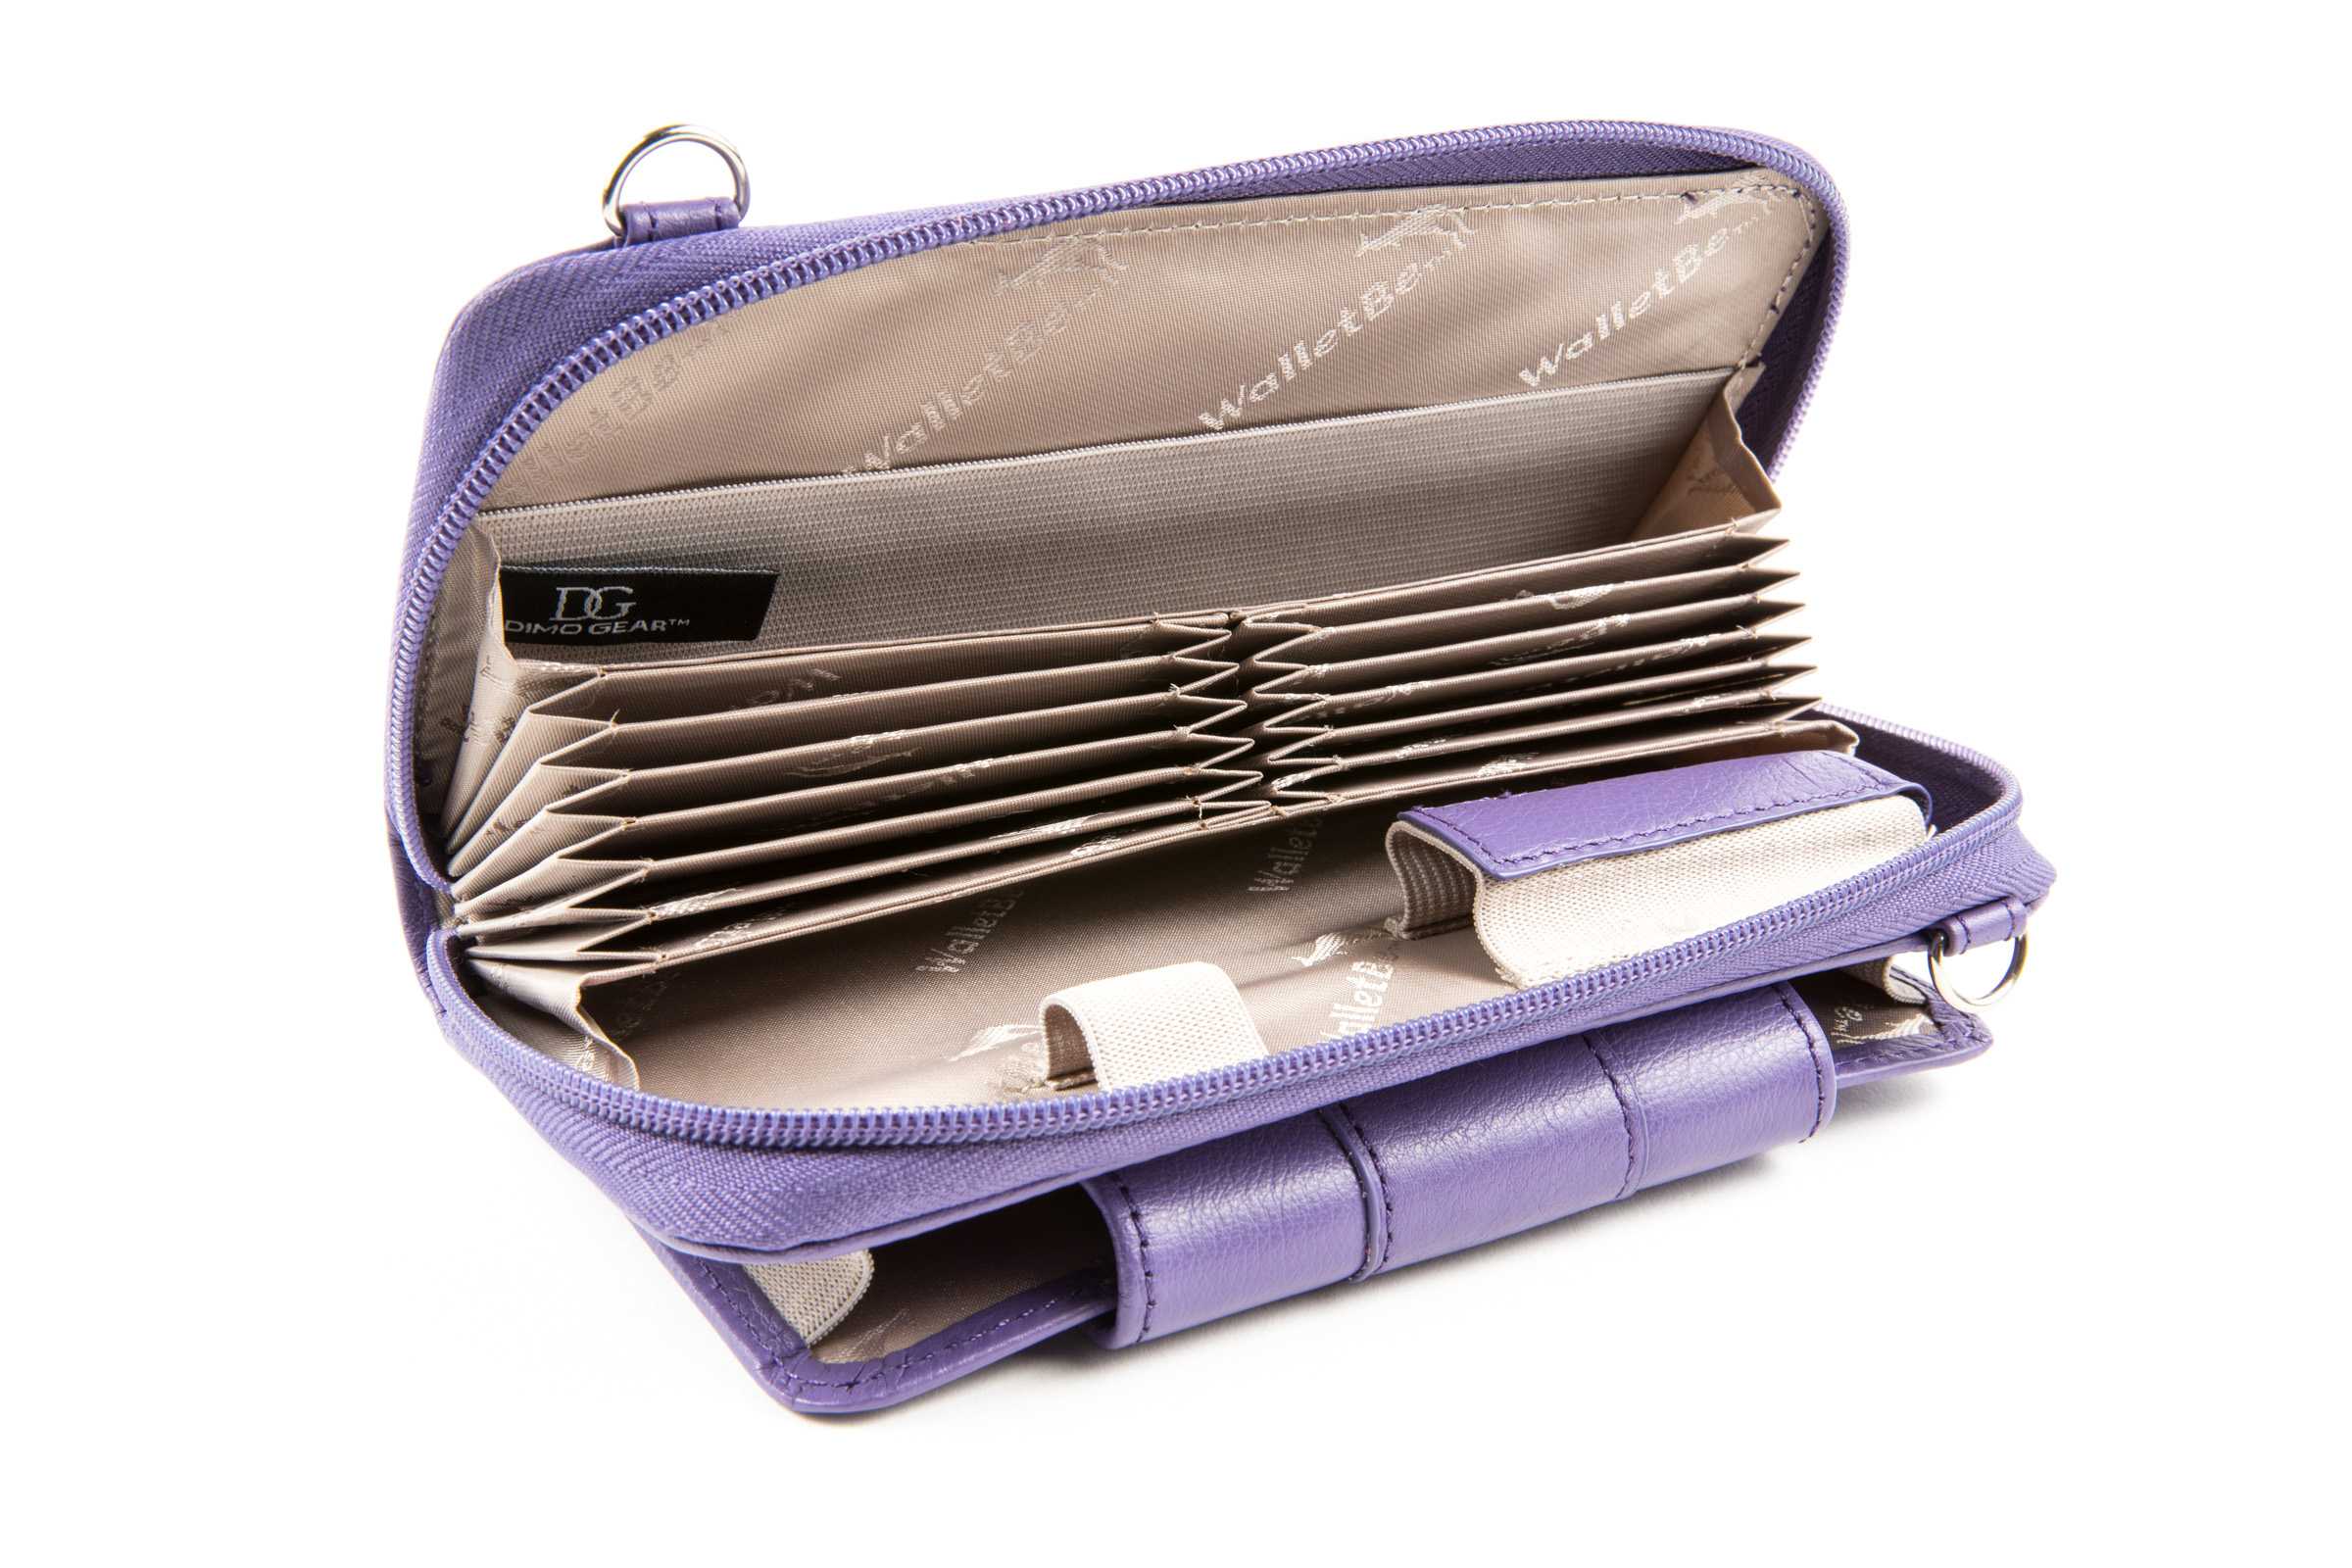 Small Crossbody Shoulder Cell phone Bag for Women,Cellphone Bags Card  Holder Wallet Purse and Handbags: Handbags: Amazon.com